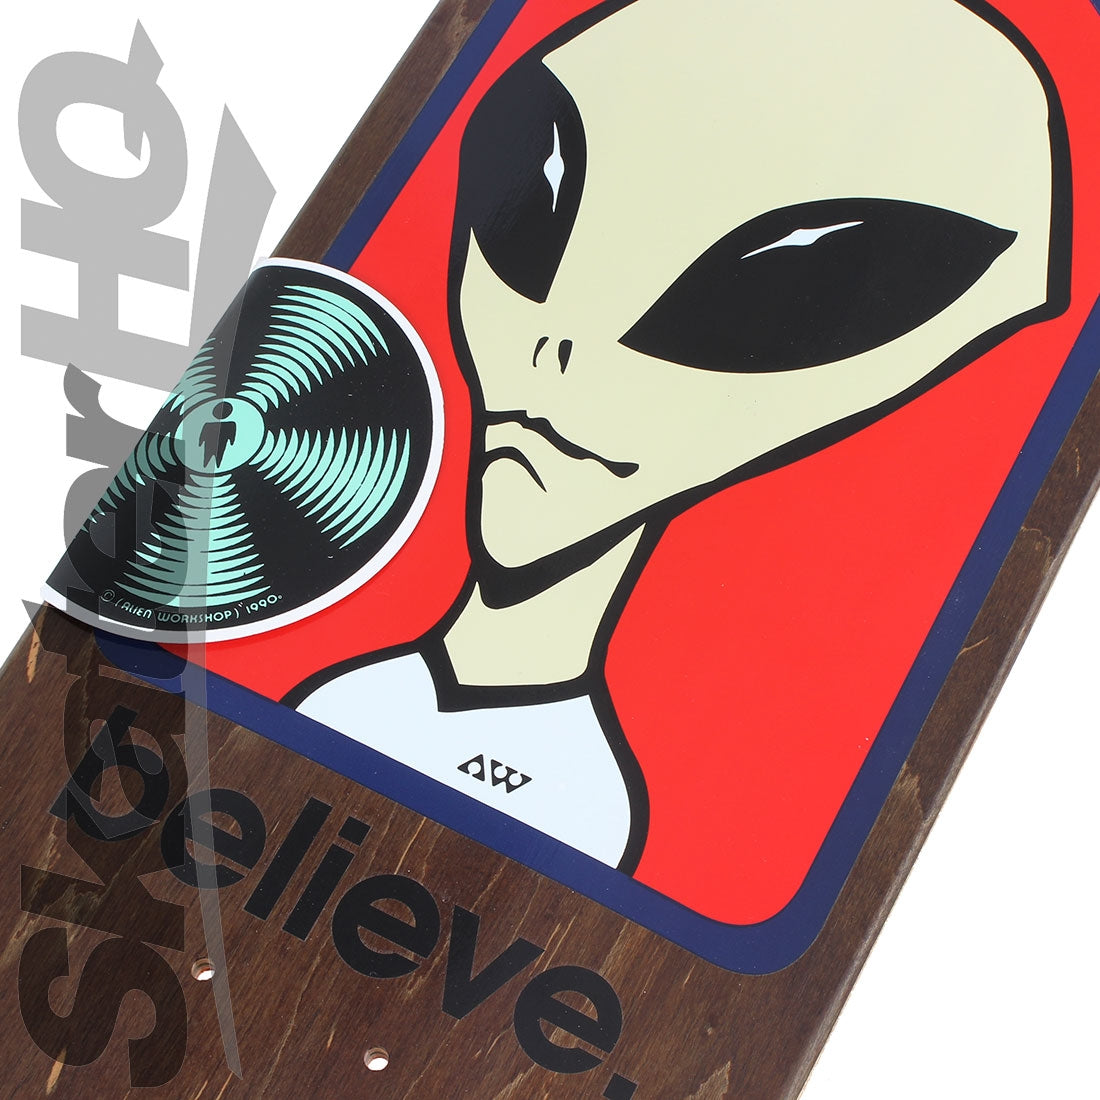 Alien Workshop Believe 8.0 Deck - Brown Skateboard Decks Modern Street